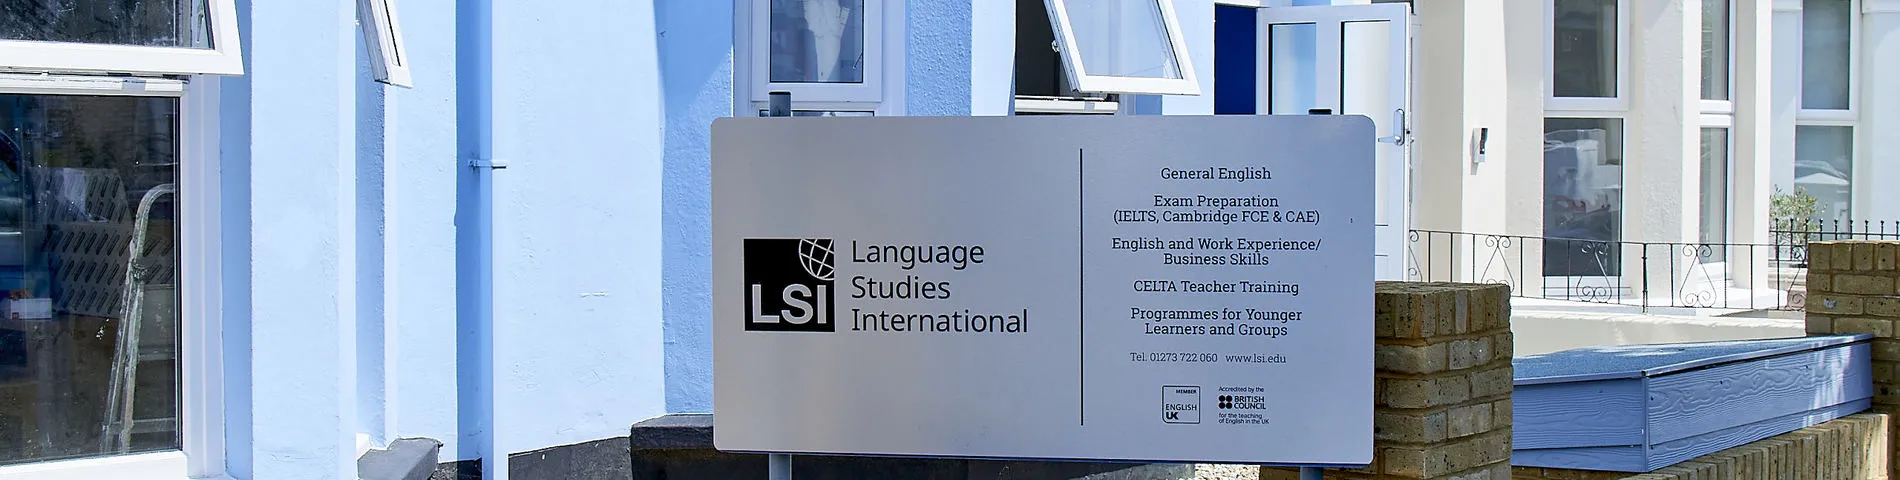 LSI - Language Studies International photo 1